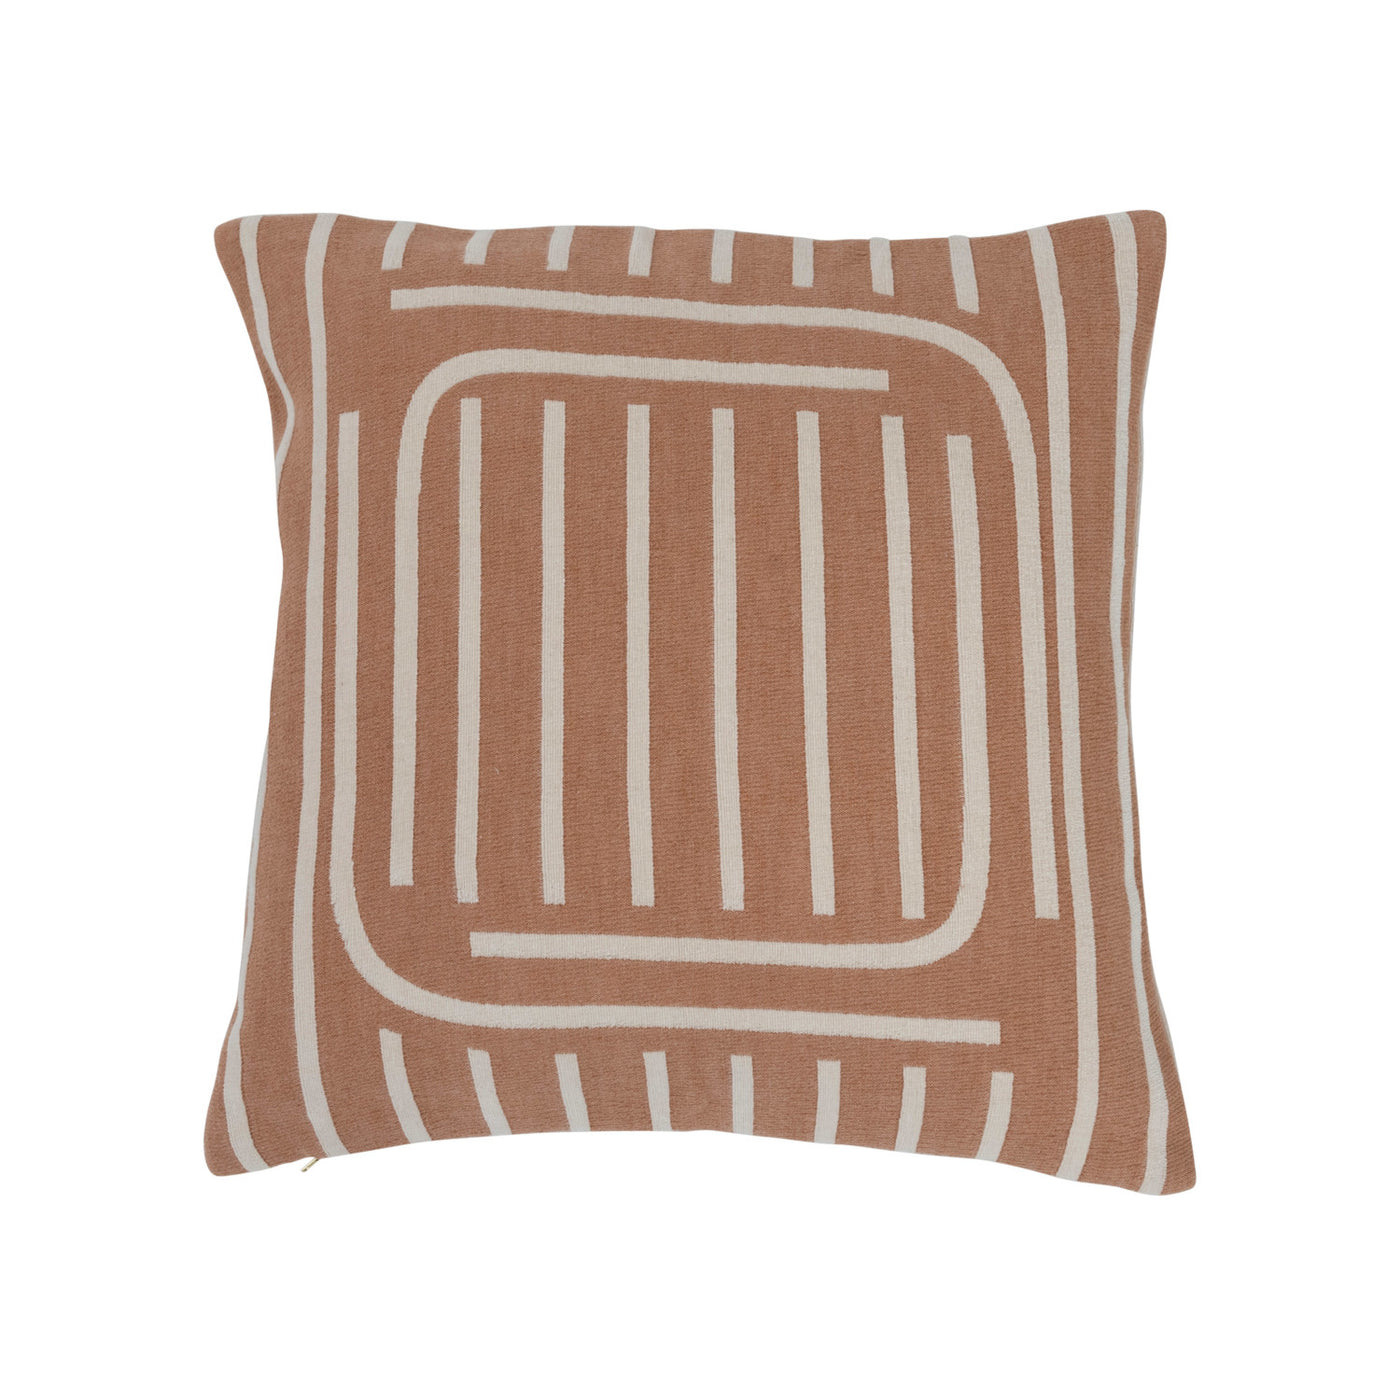 20" Woven Cotton Reversible Pillow w/ Lines, Salmon & White